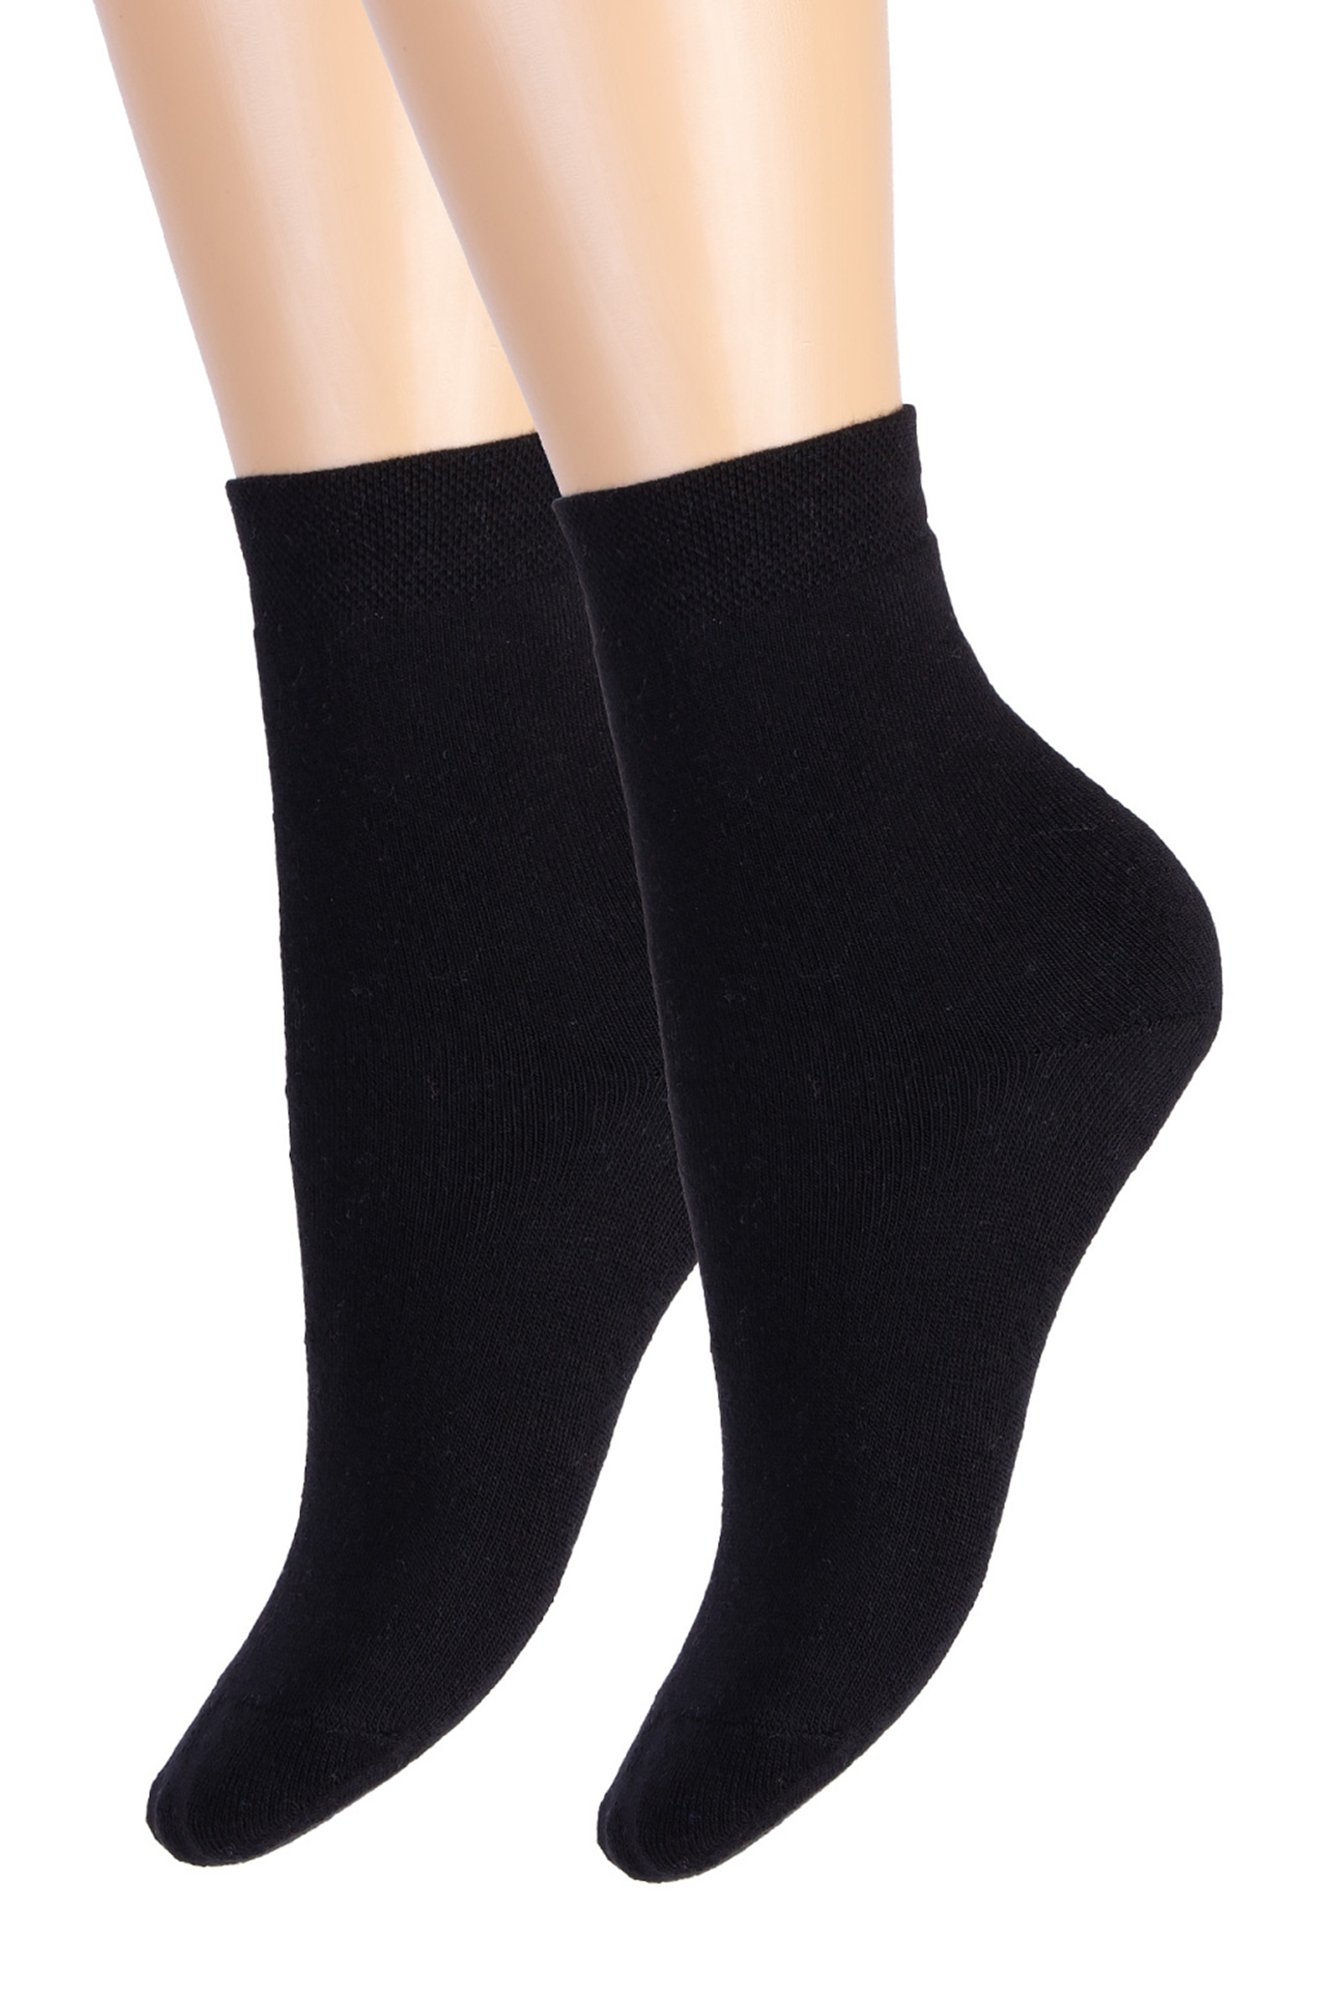 Махровые носки для мальчика Красная ветка Артикул: C1615, 2 пар